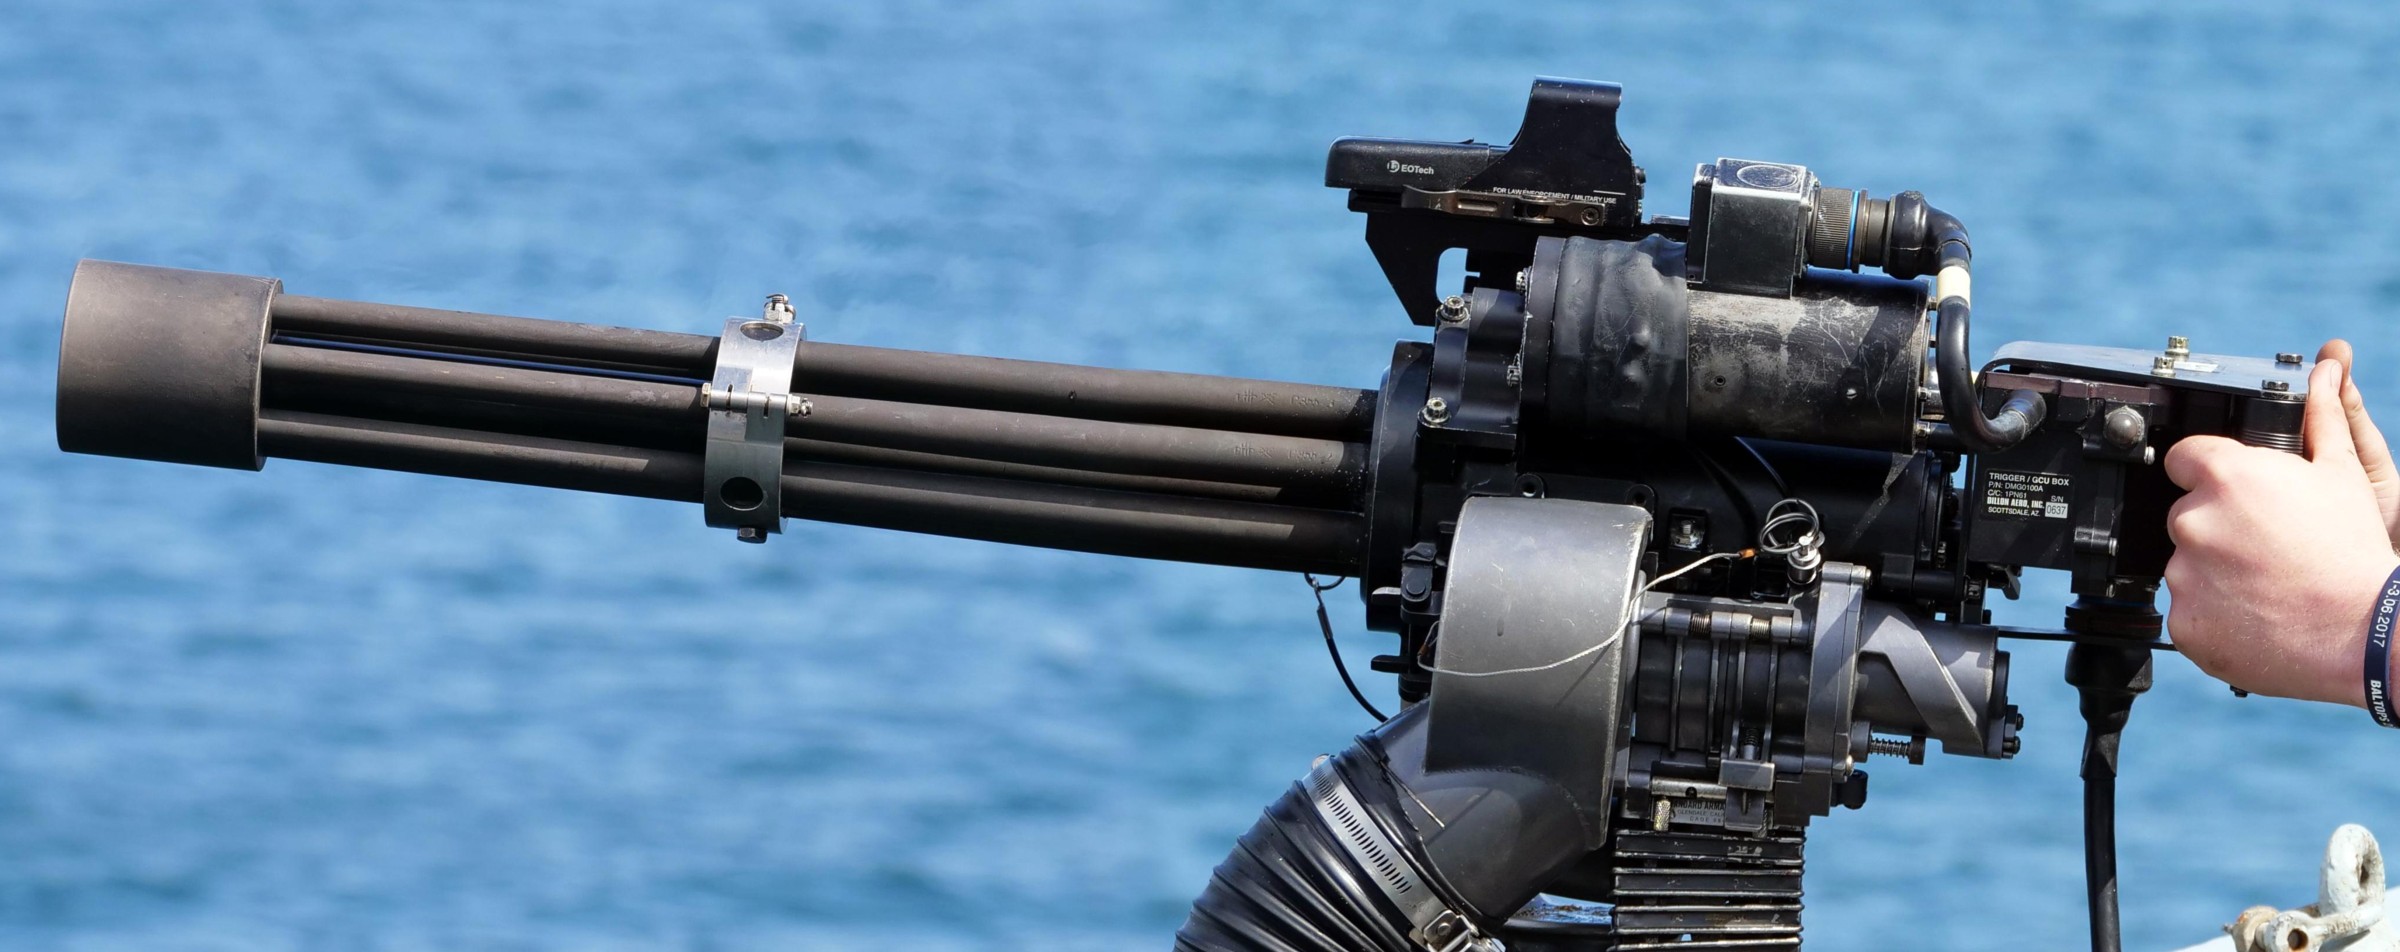 m134 mk.44 gau-17/a rotary machine gun system minigun gatling 7,62mm navy 40